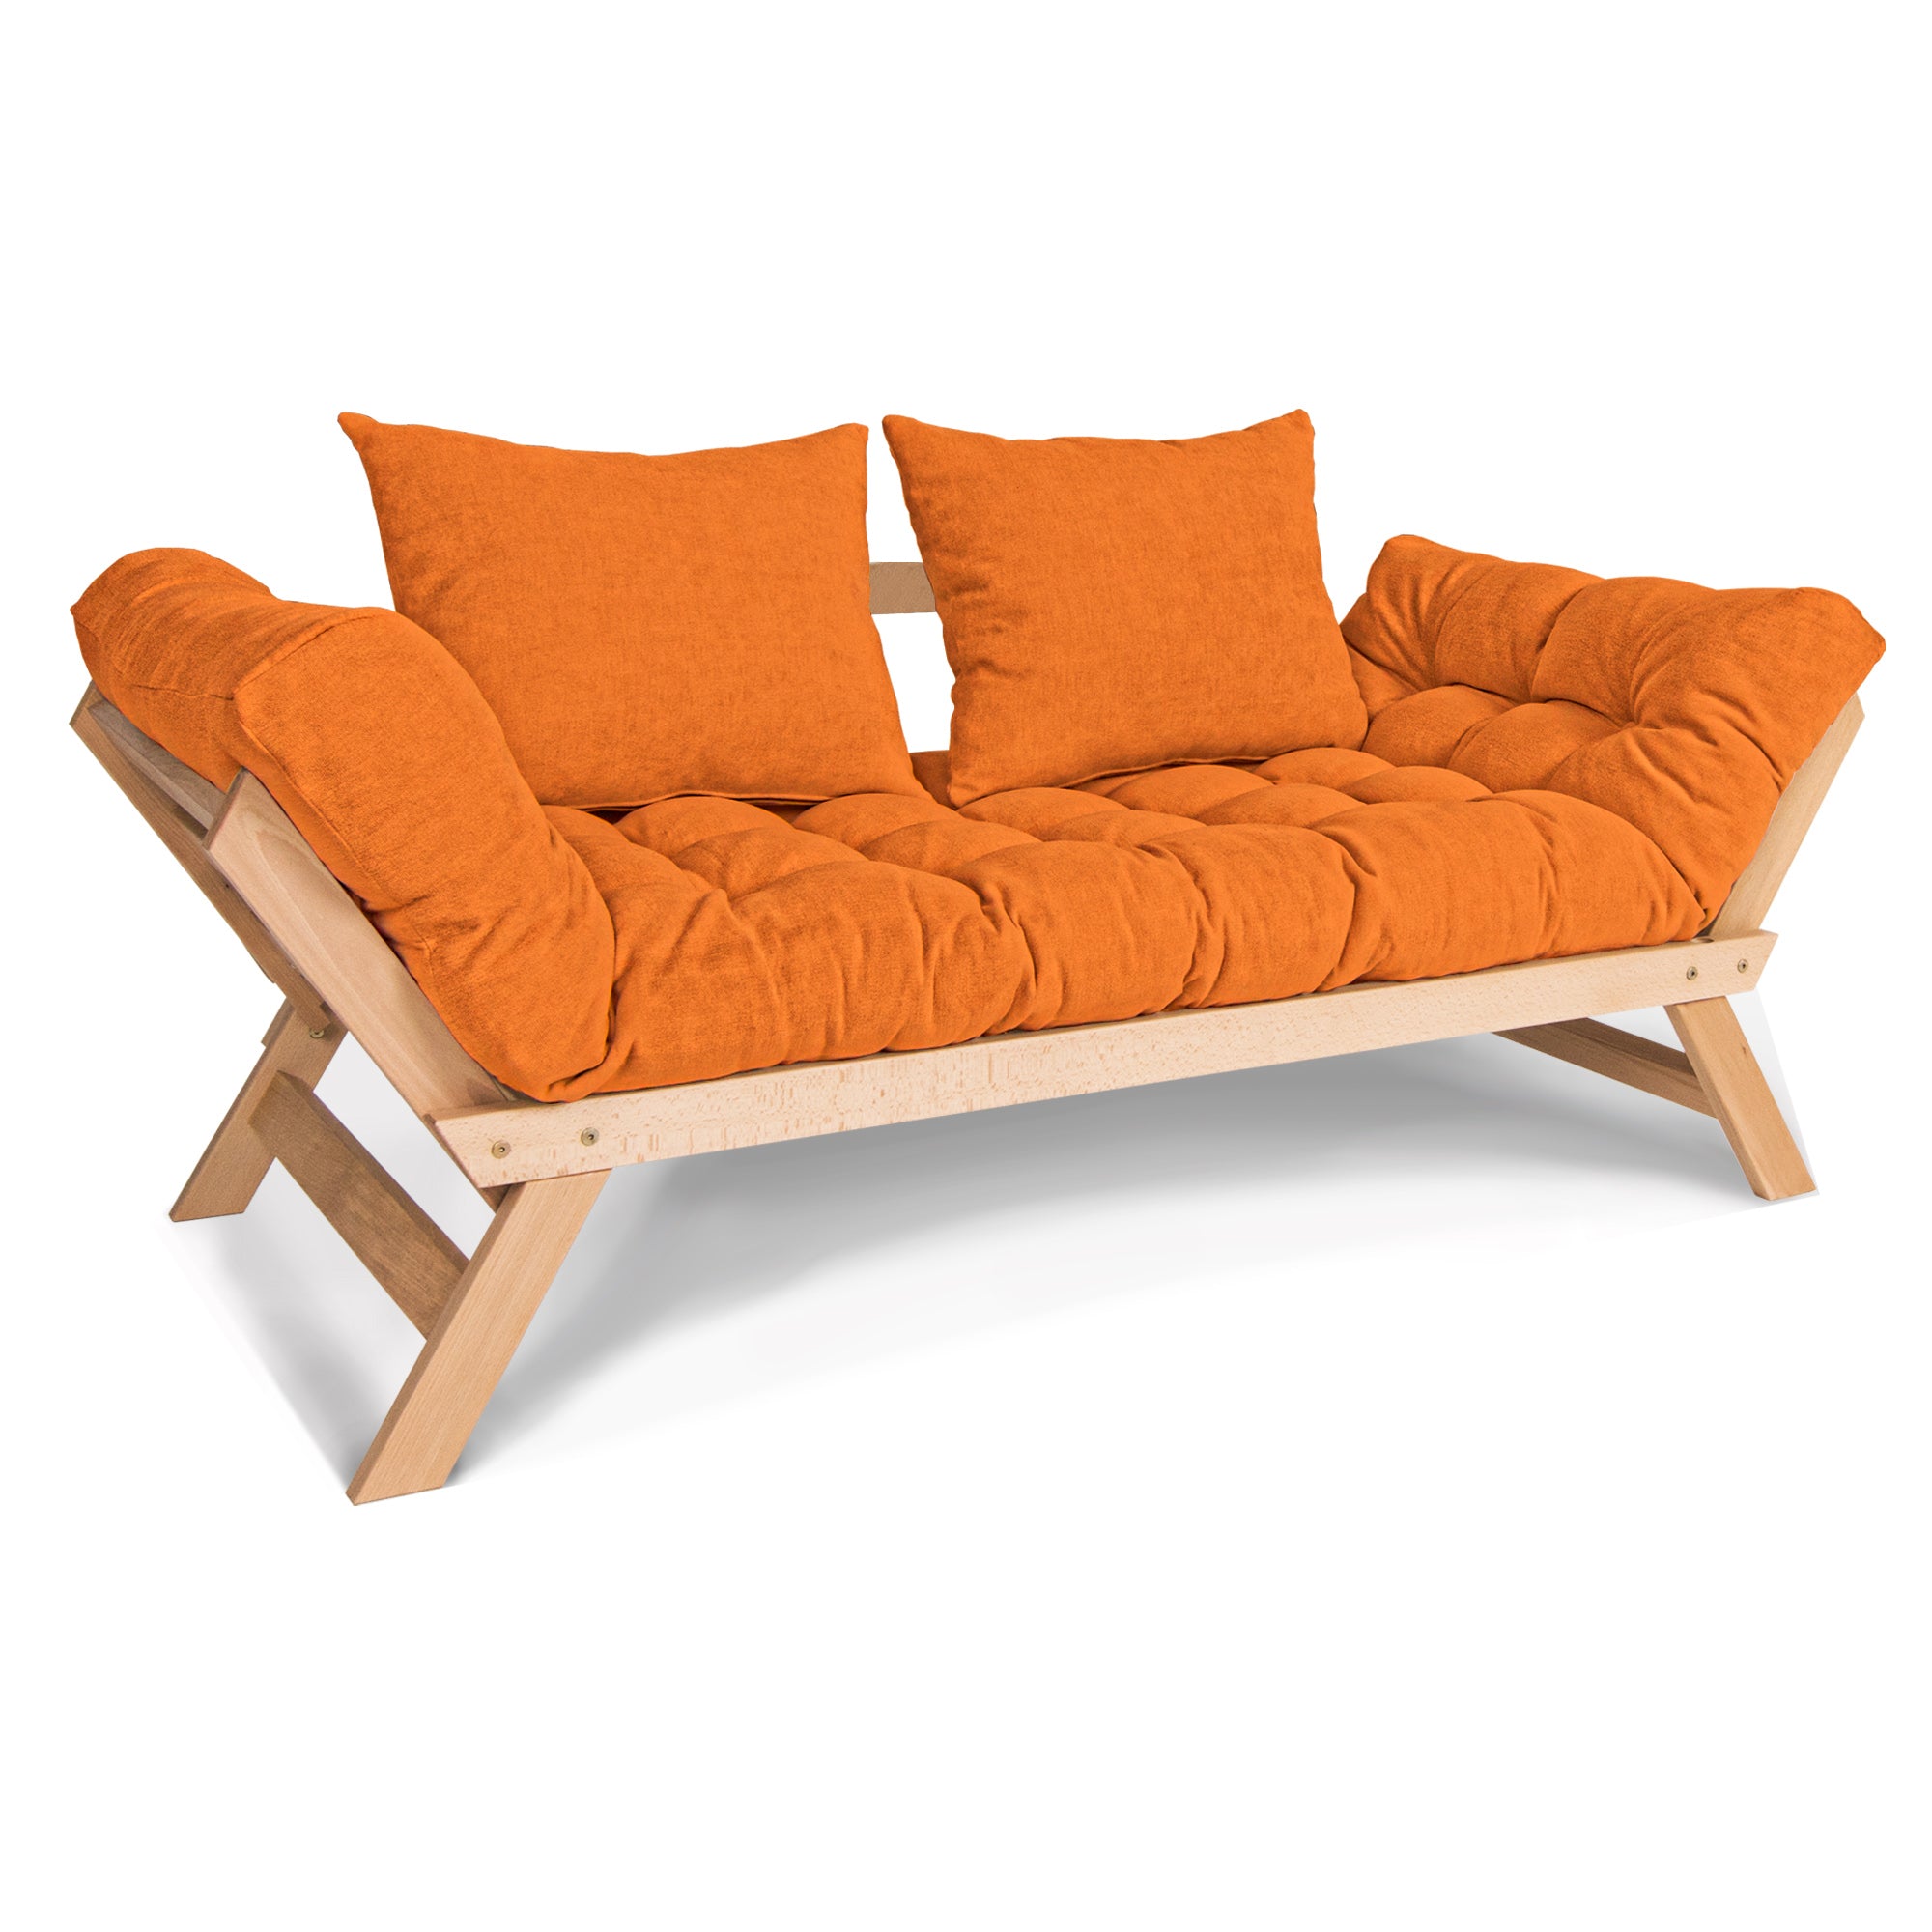 ALLEGRO Folding Sofa Bed, Beech Wood Frame, Natural Colour upholstery colour  orange